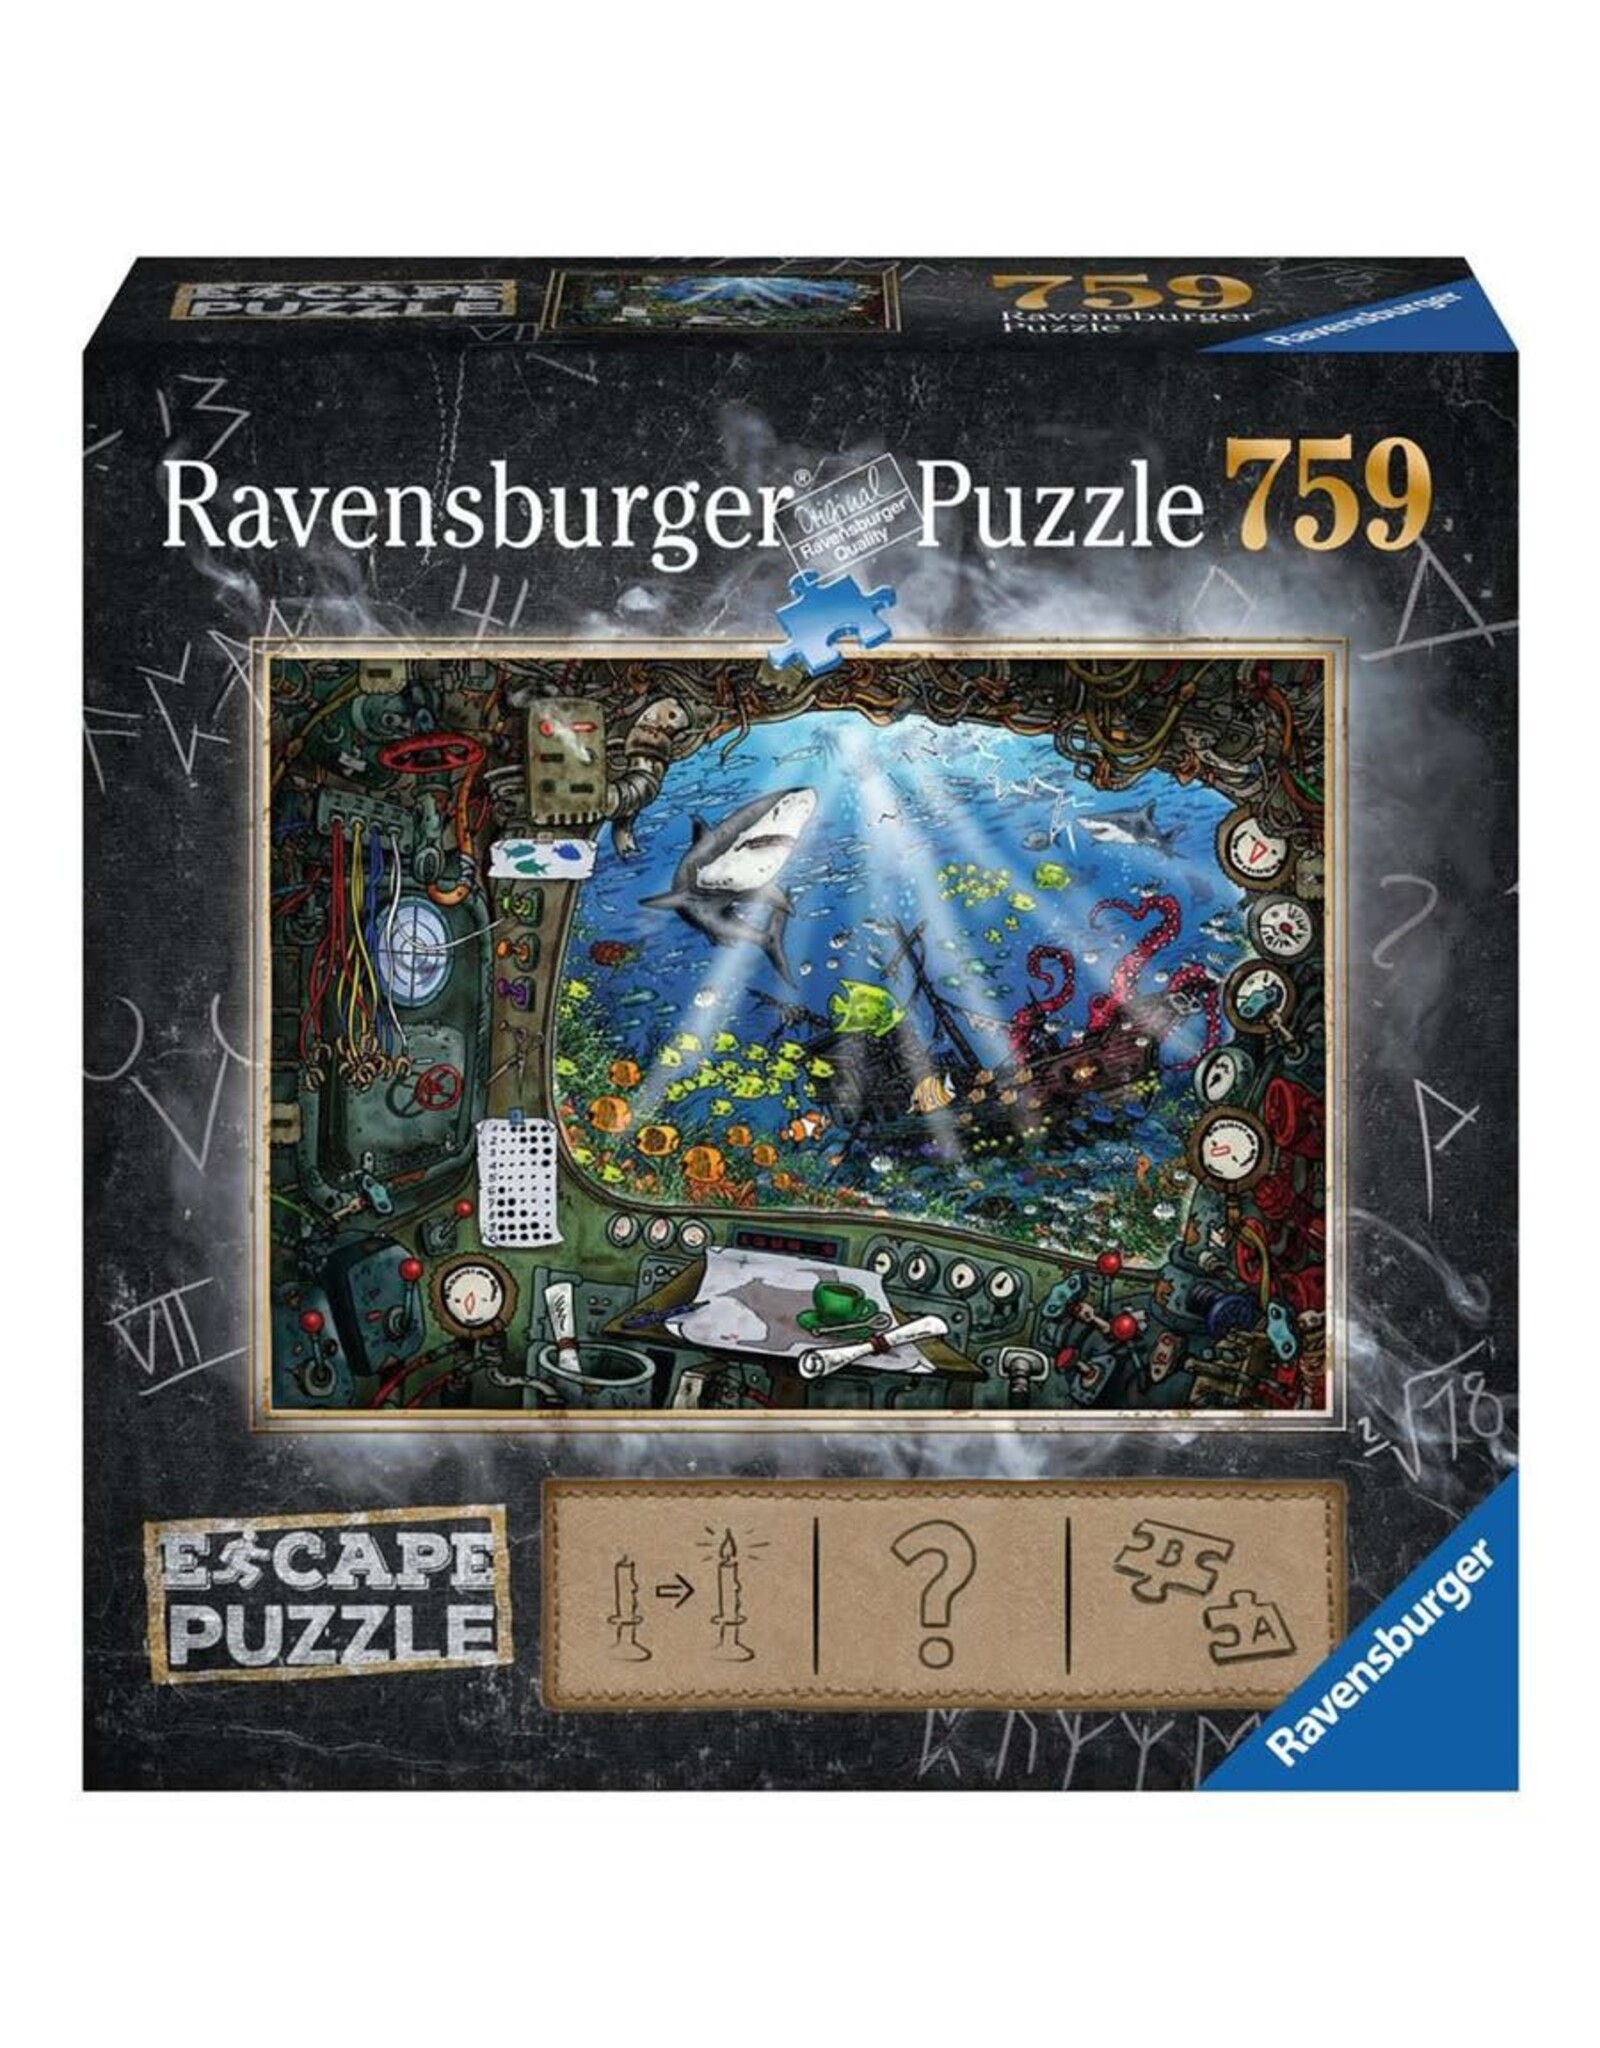 Ravensburger Escape Puzzle: Escape Submarine (759 PC)